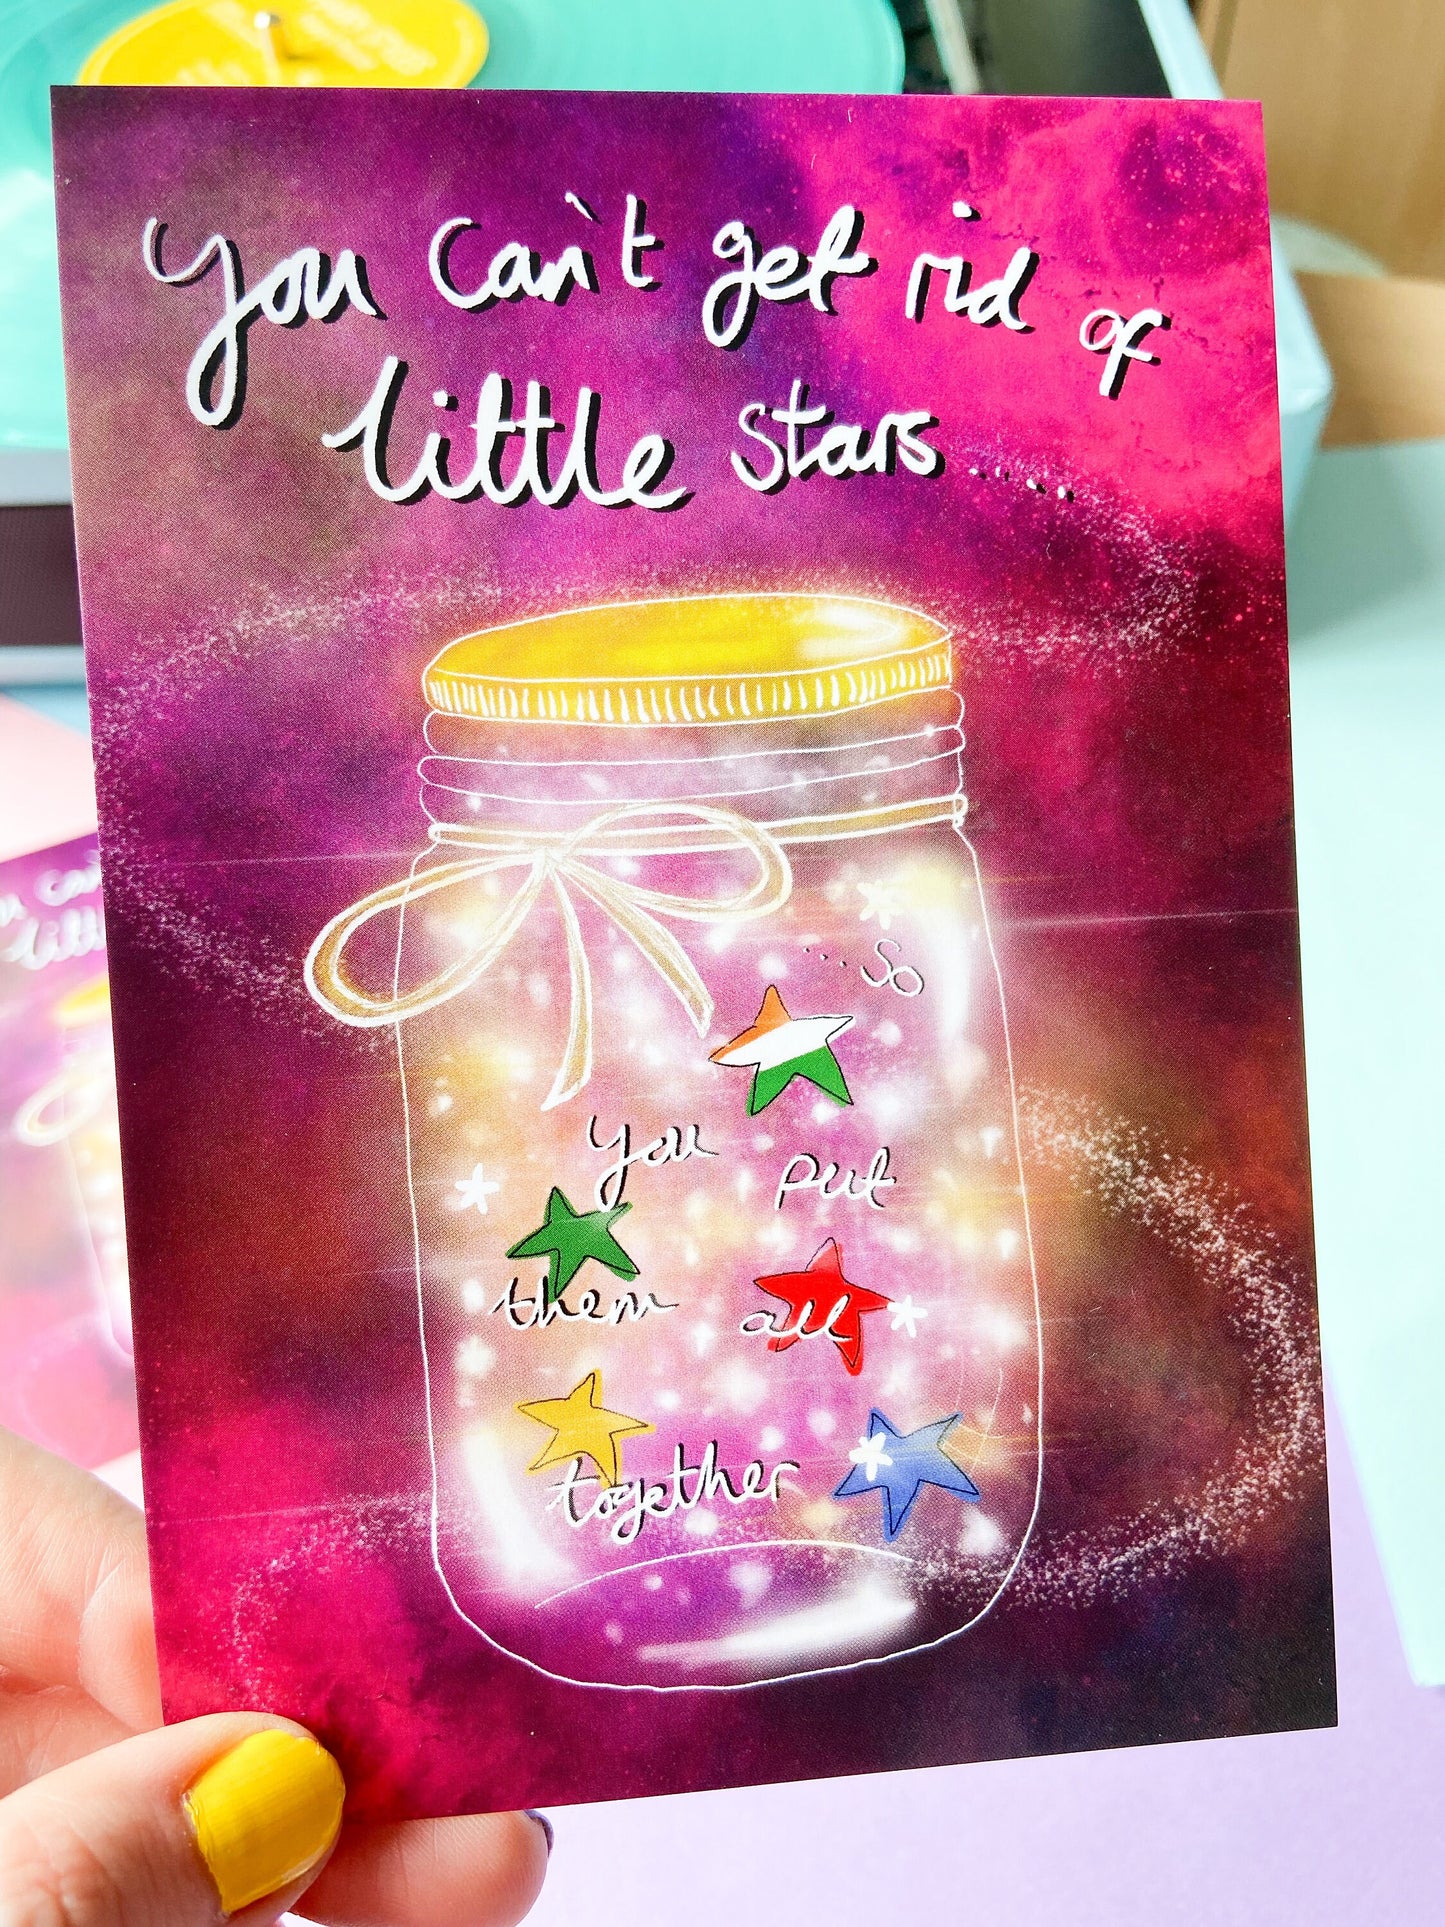 Can't Get Rid of Little Stars Postcard, 1D fans